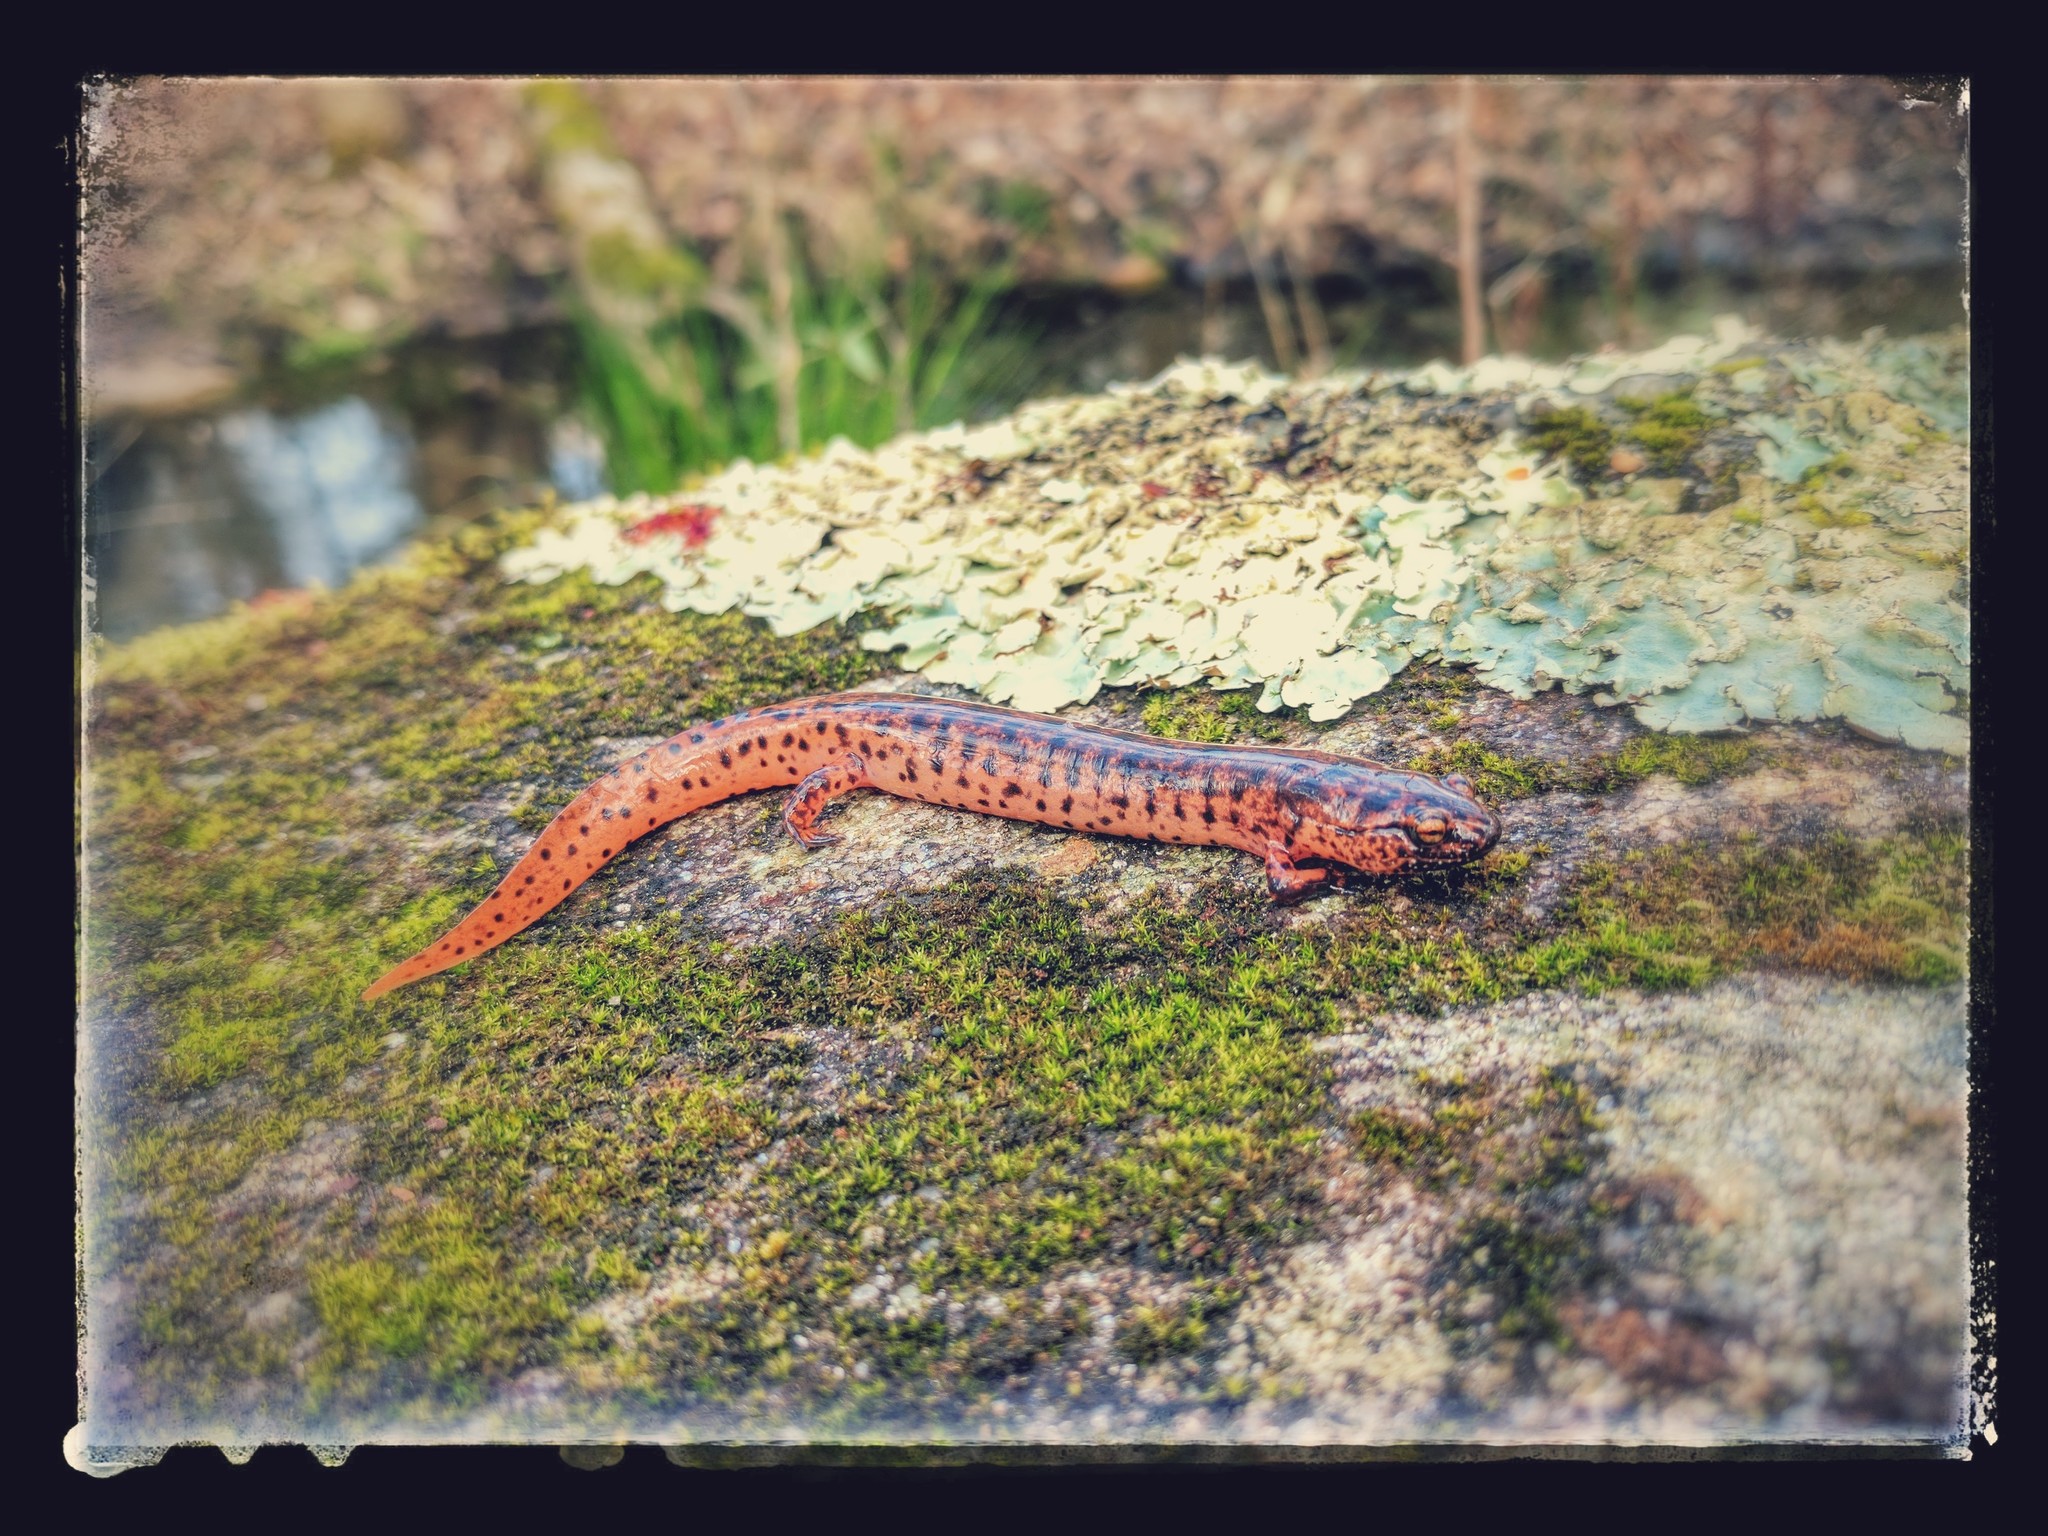 It's salamander season around Auburn feature image